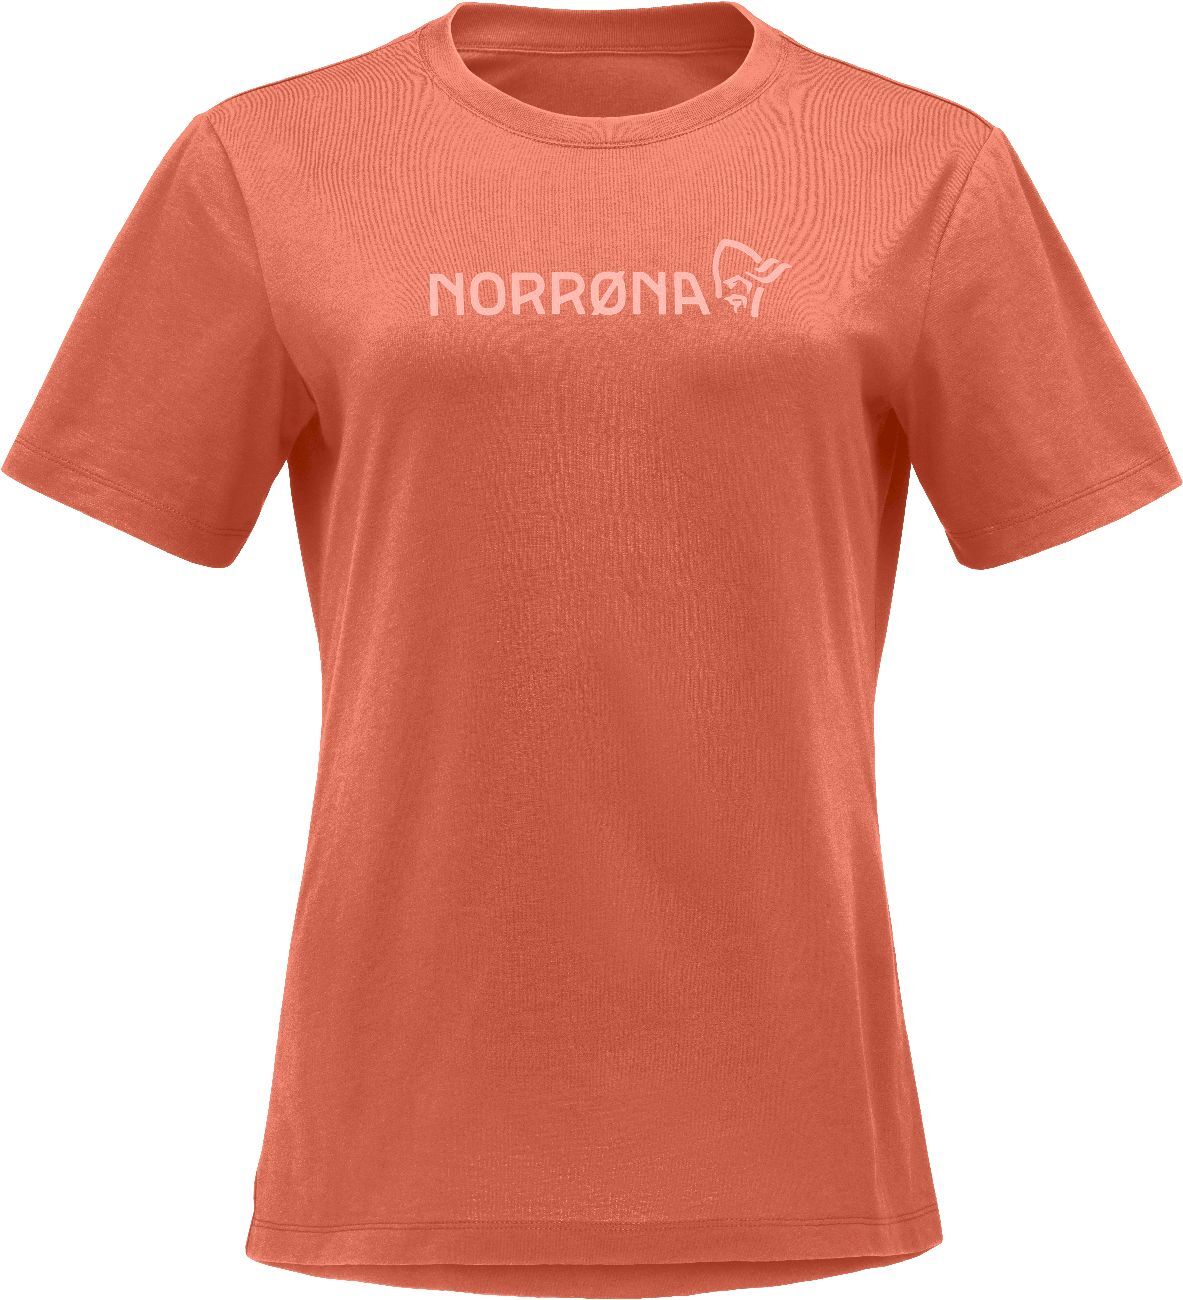 Norrona /29 Cotton Norrona Viking - T-shirt - Dam